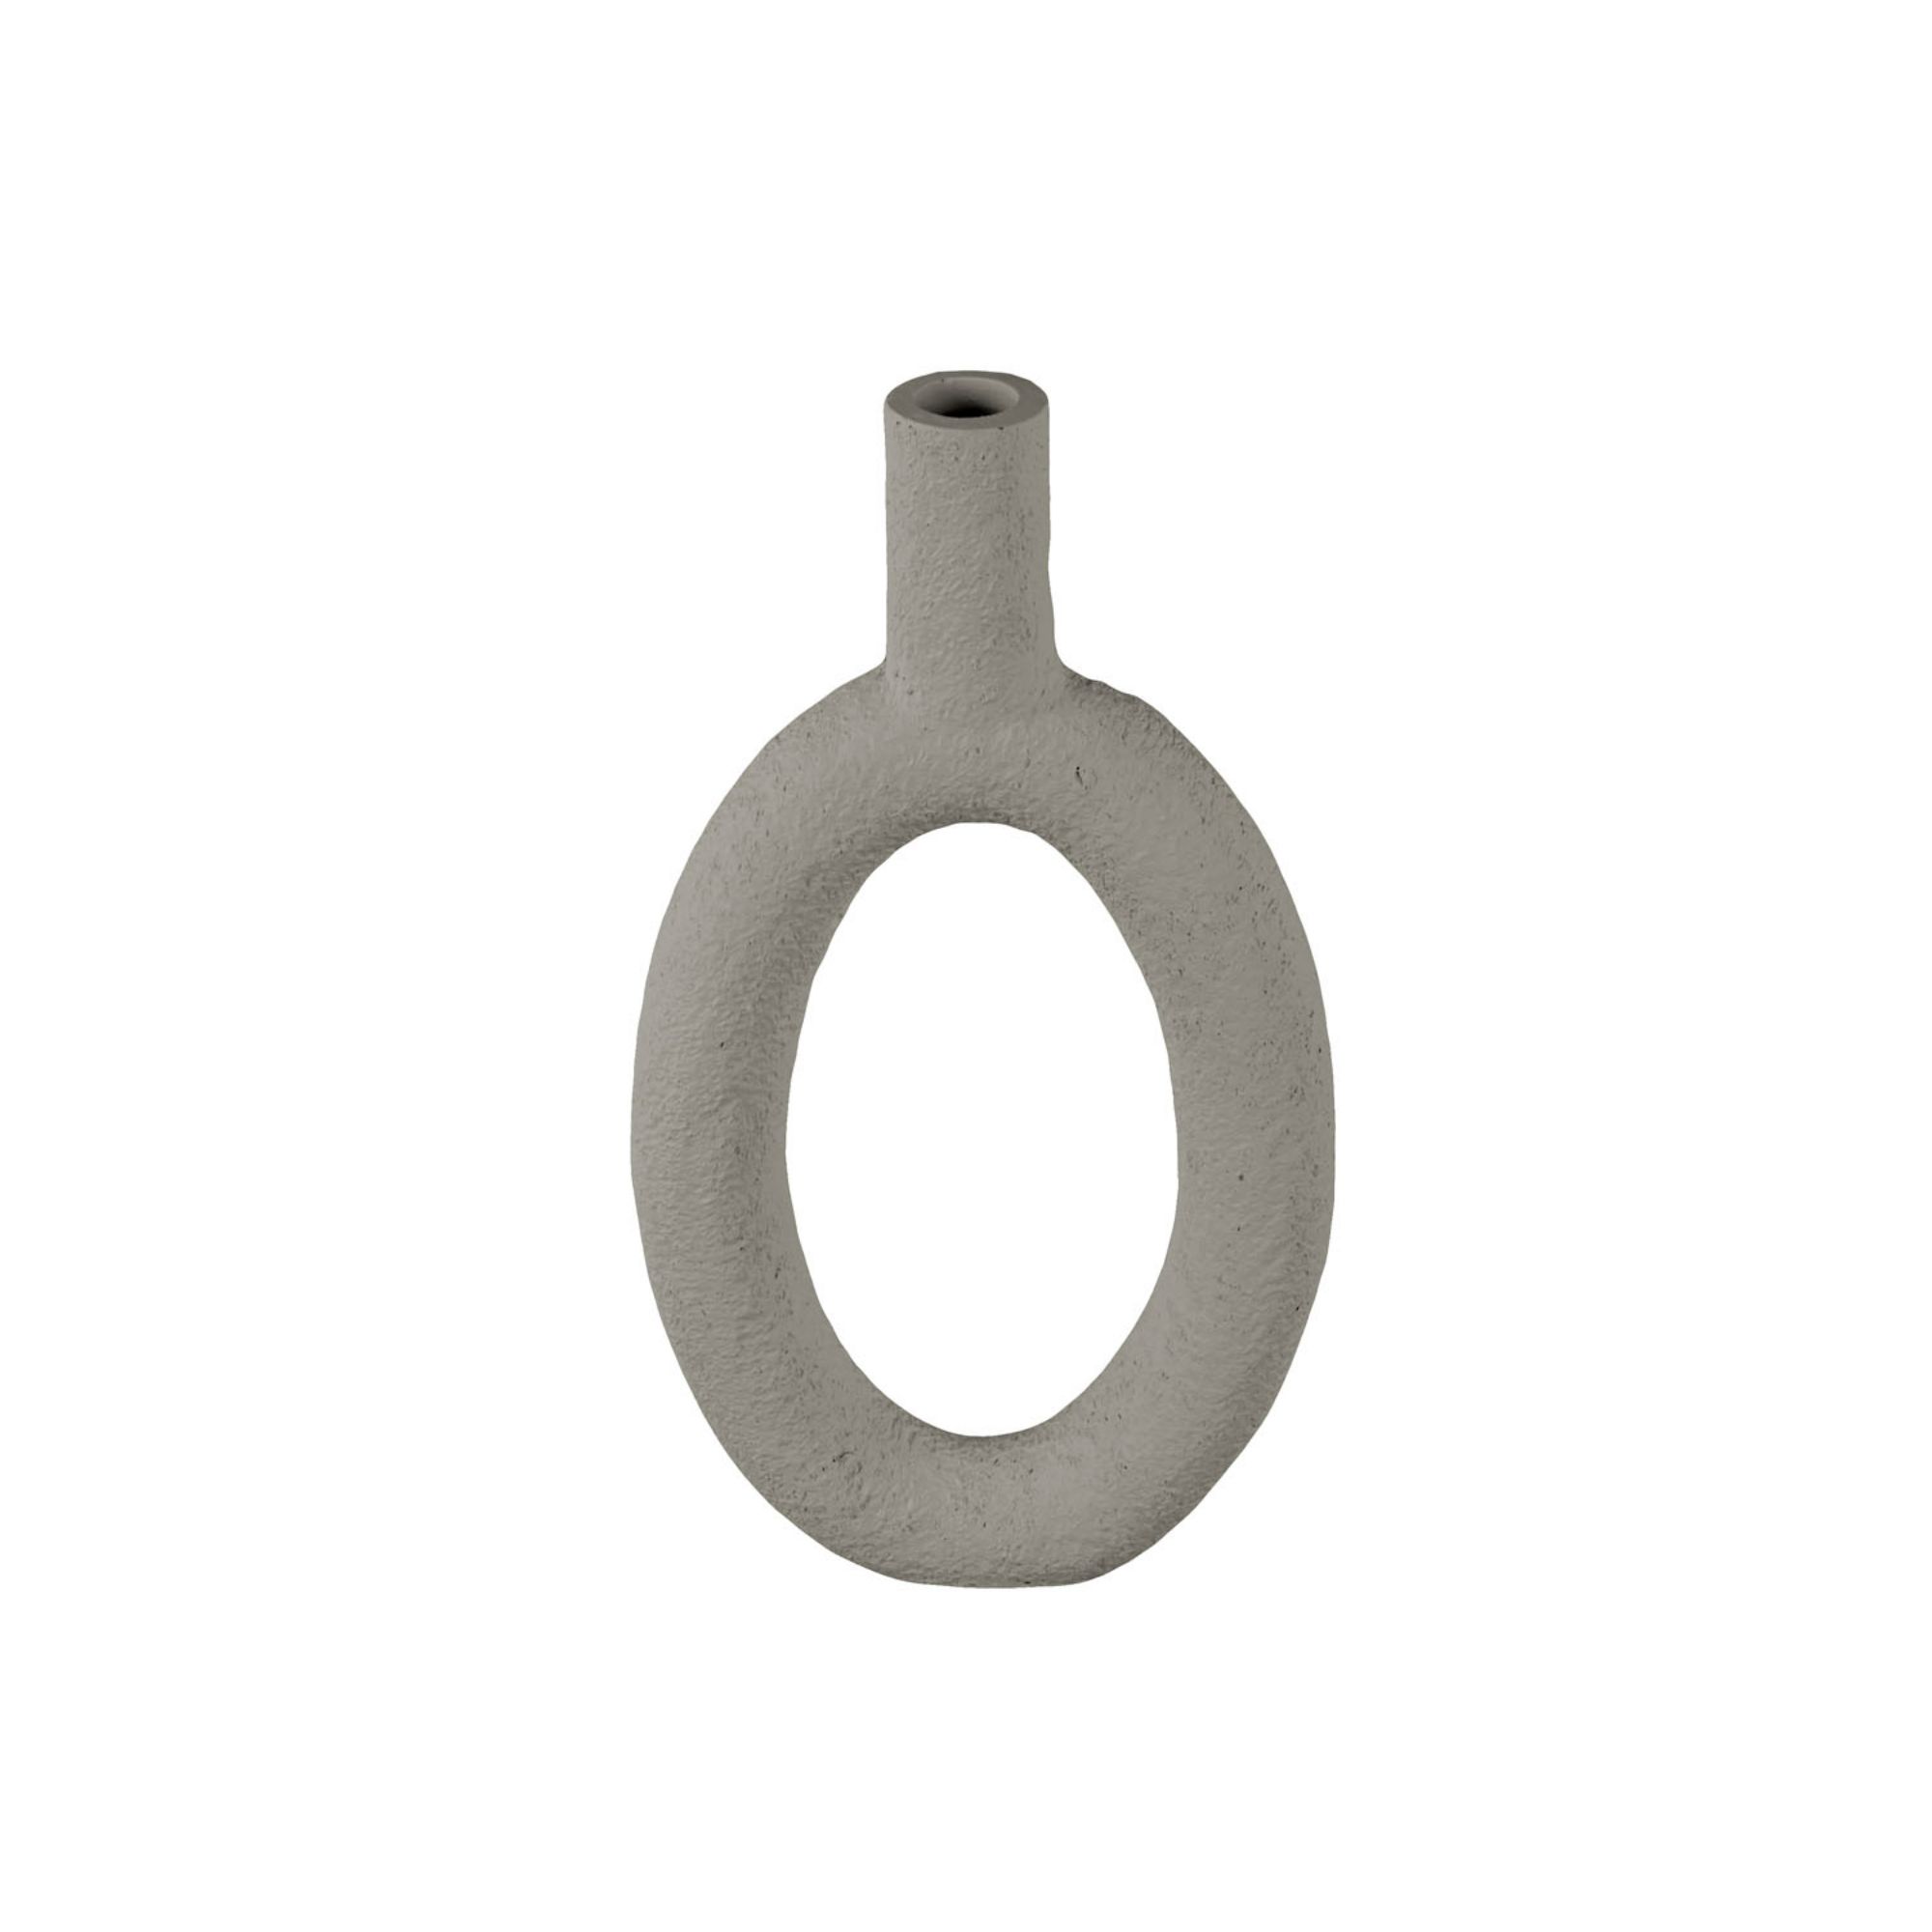 Present Time Vaas Ring - Polyresin - Ovaal Hoog Warm Grijs - 16,5x3,5x31cm